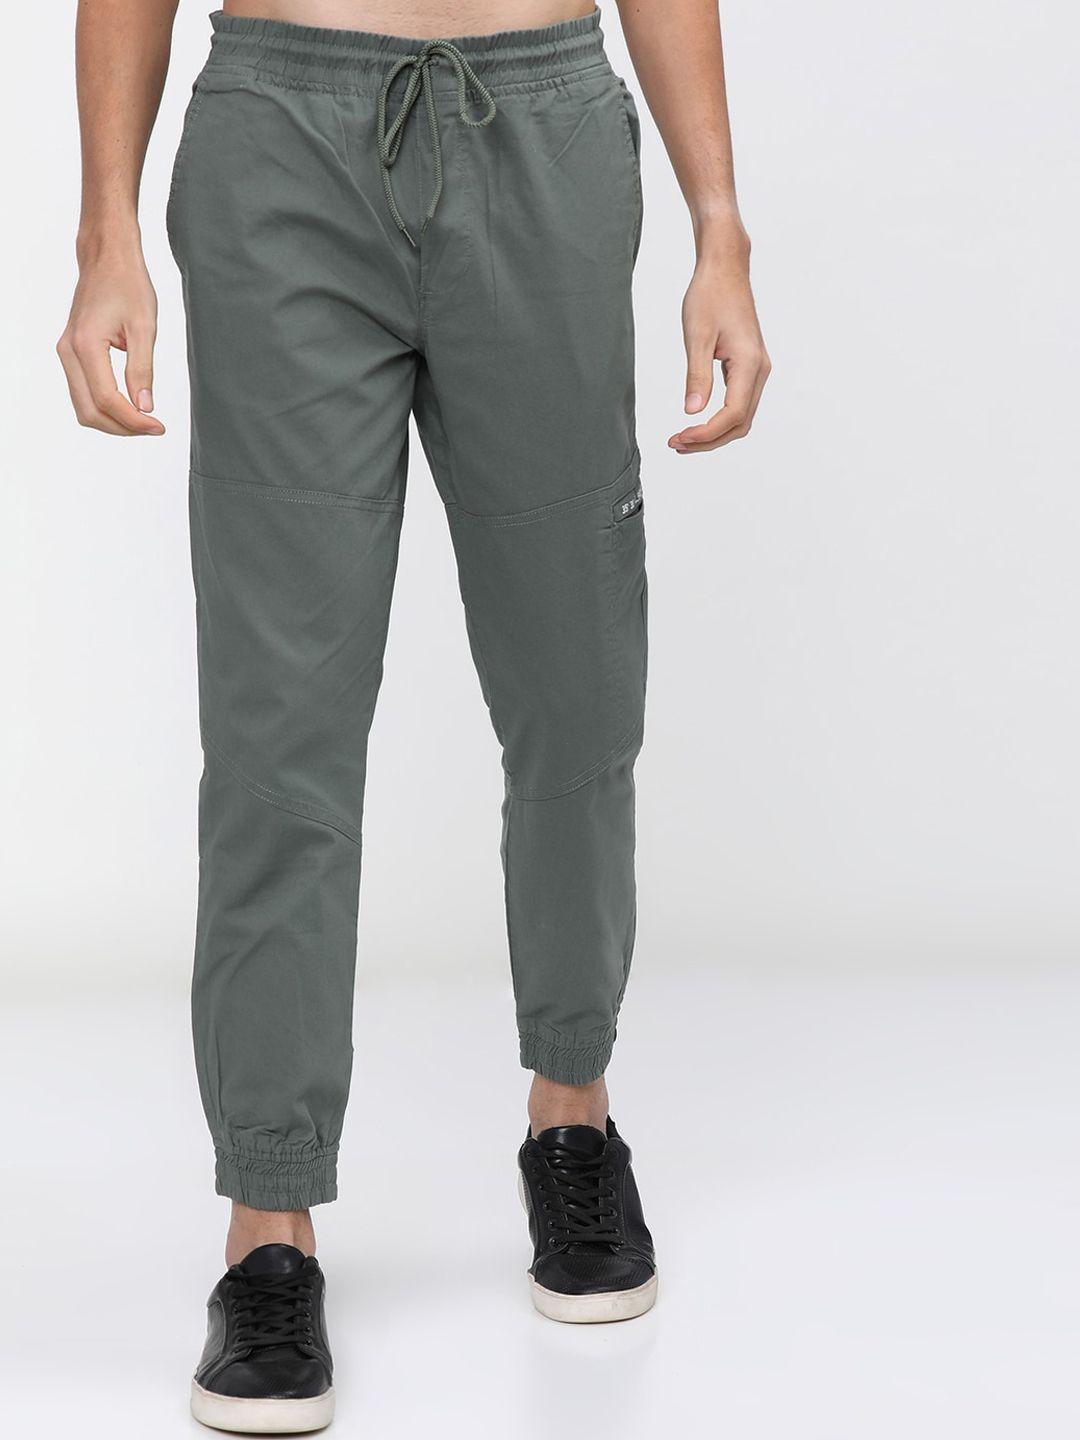 highlander-men-grey-jogger-trousers